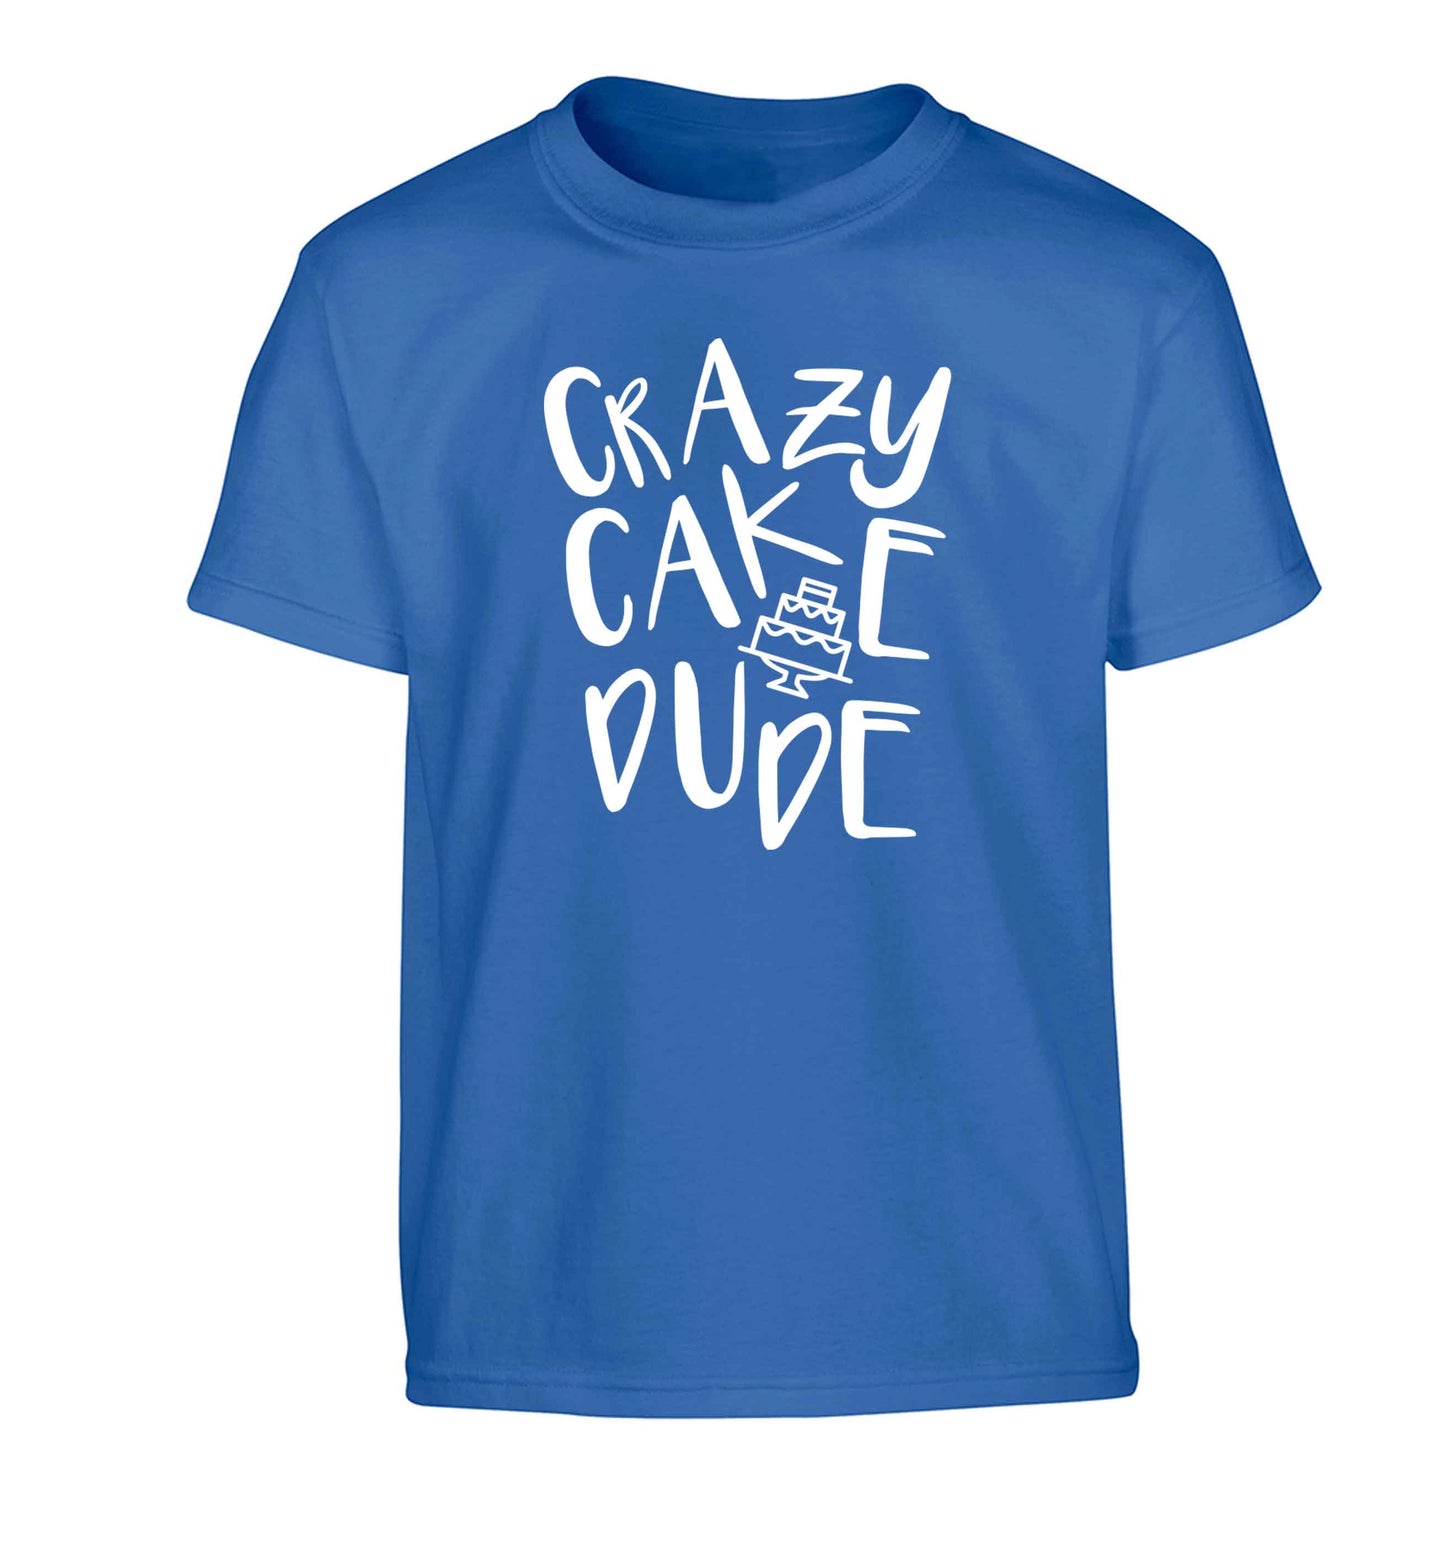 Crazy cake dude Children's blue Tshirt 12-13 Years